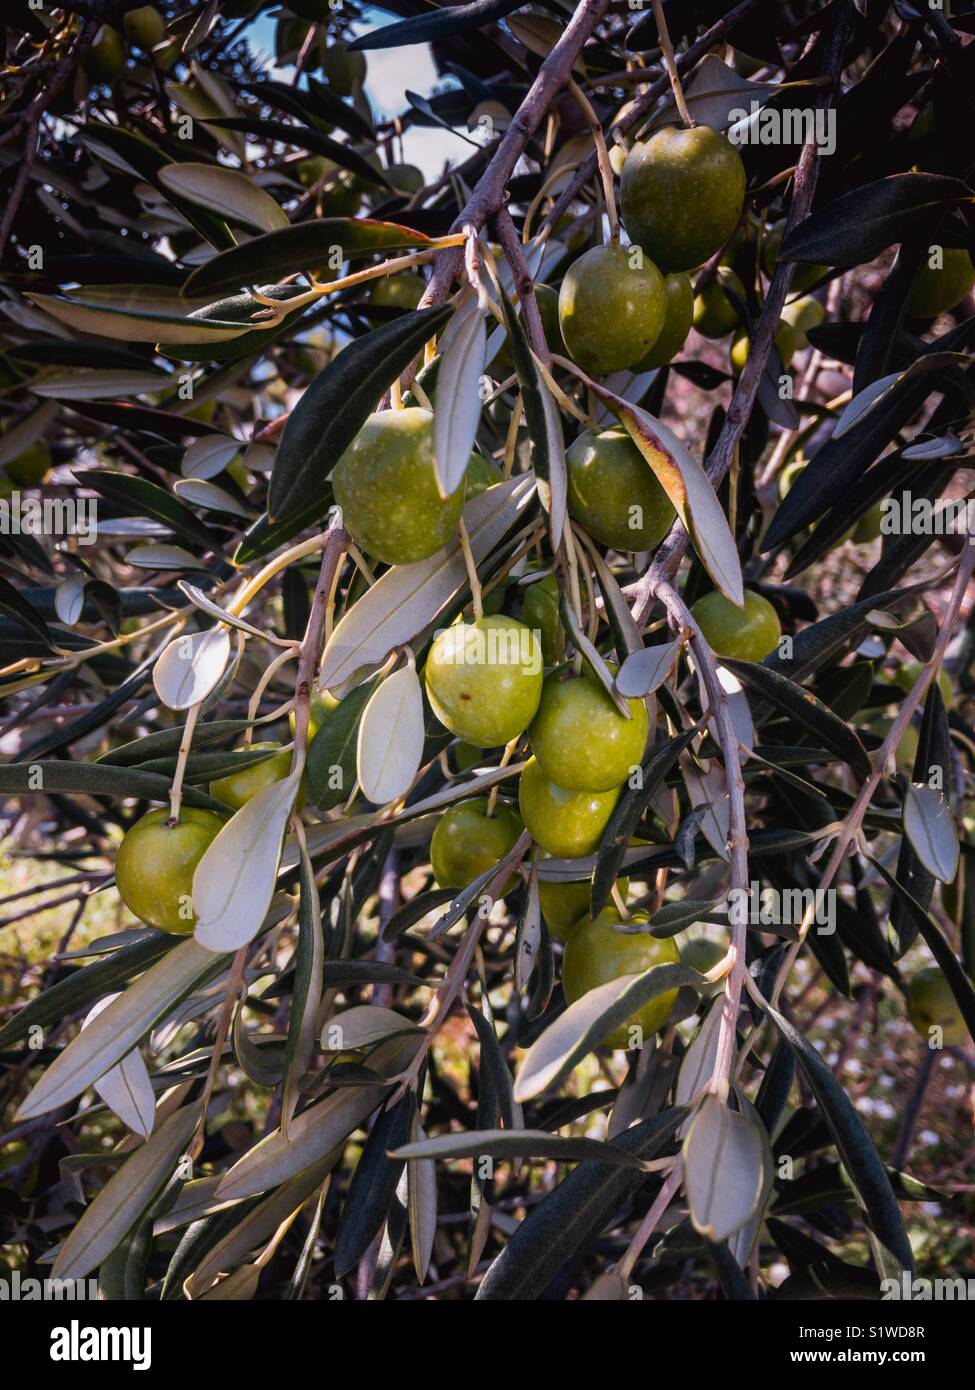 Green olives on fruit ready for harvesting Stock Photo